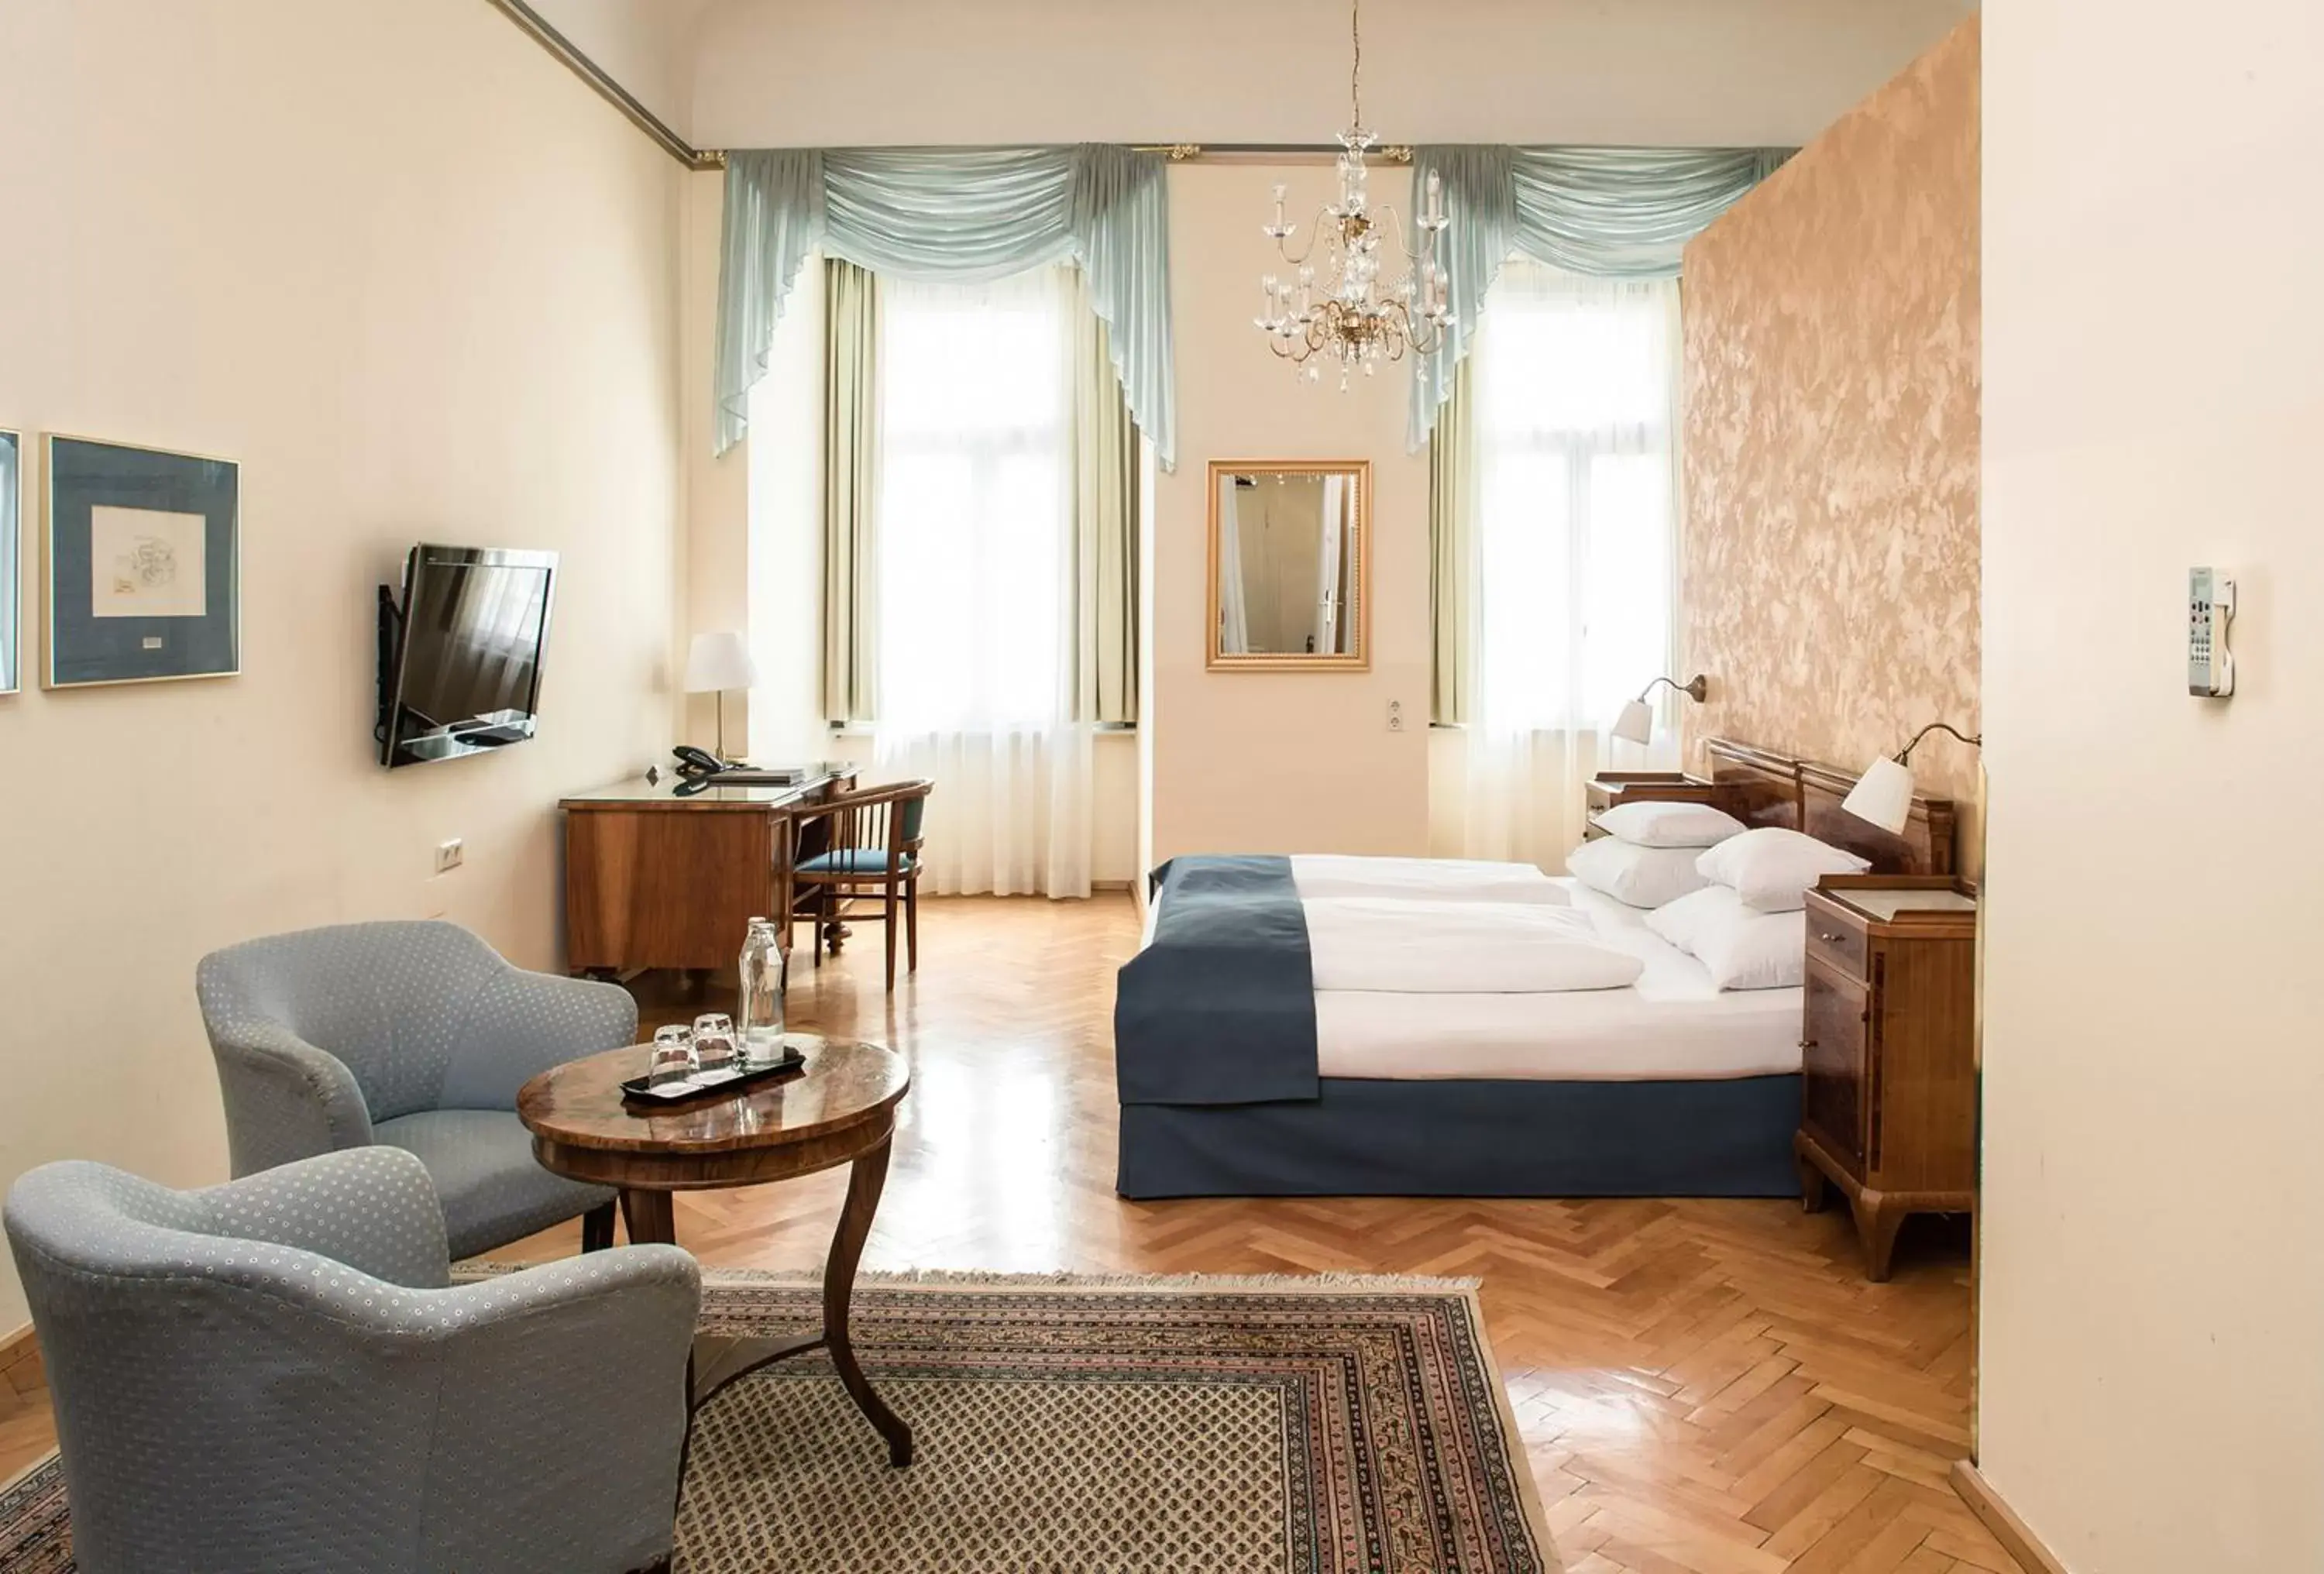 Photo of the whole room in Palais Hotel Erzherzog Johann